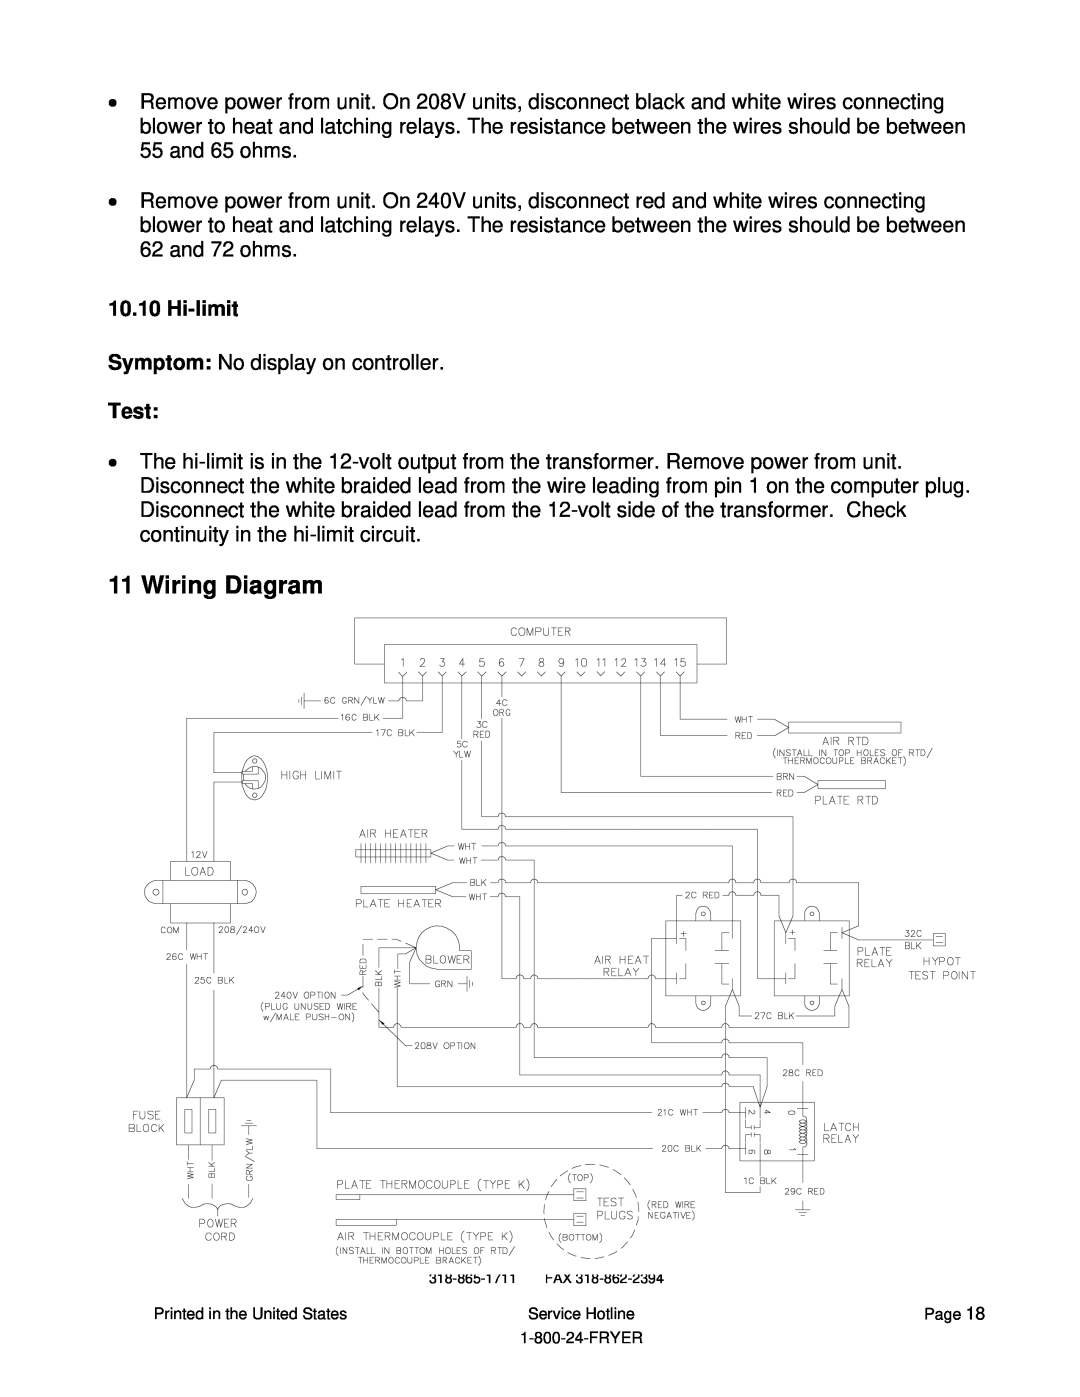 Frymaster HLZ 22, HLZ 18 service manual Wiring Diagram, Hi-limit, Test 